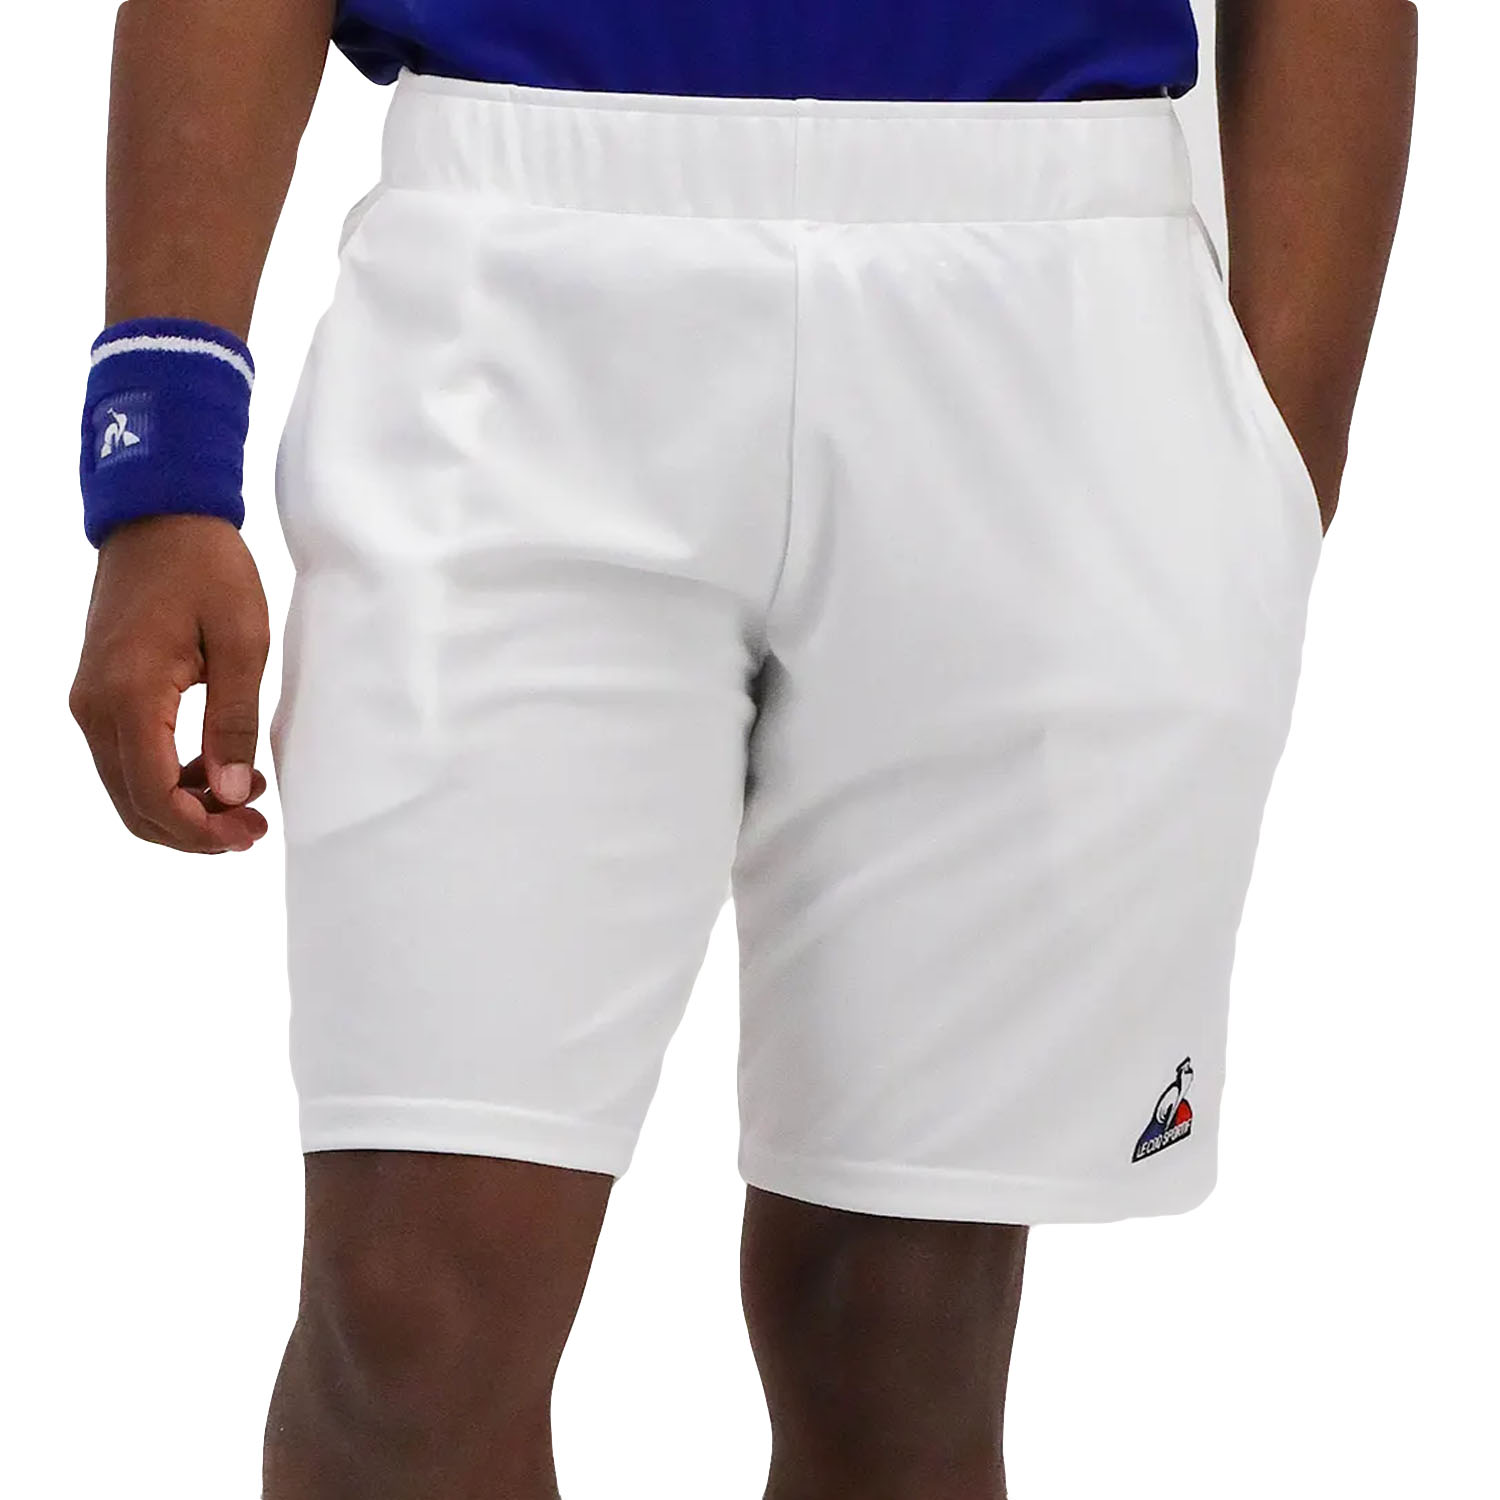 Le Coq Sportif Replica 7in Shorts - New Optical White